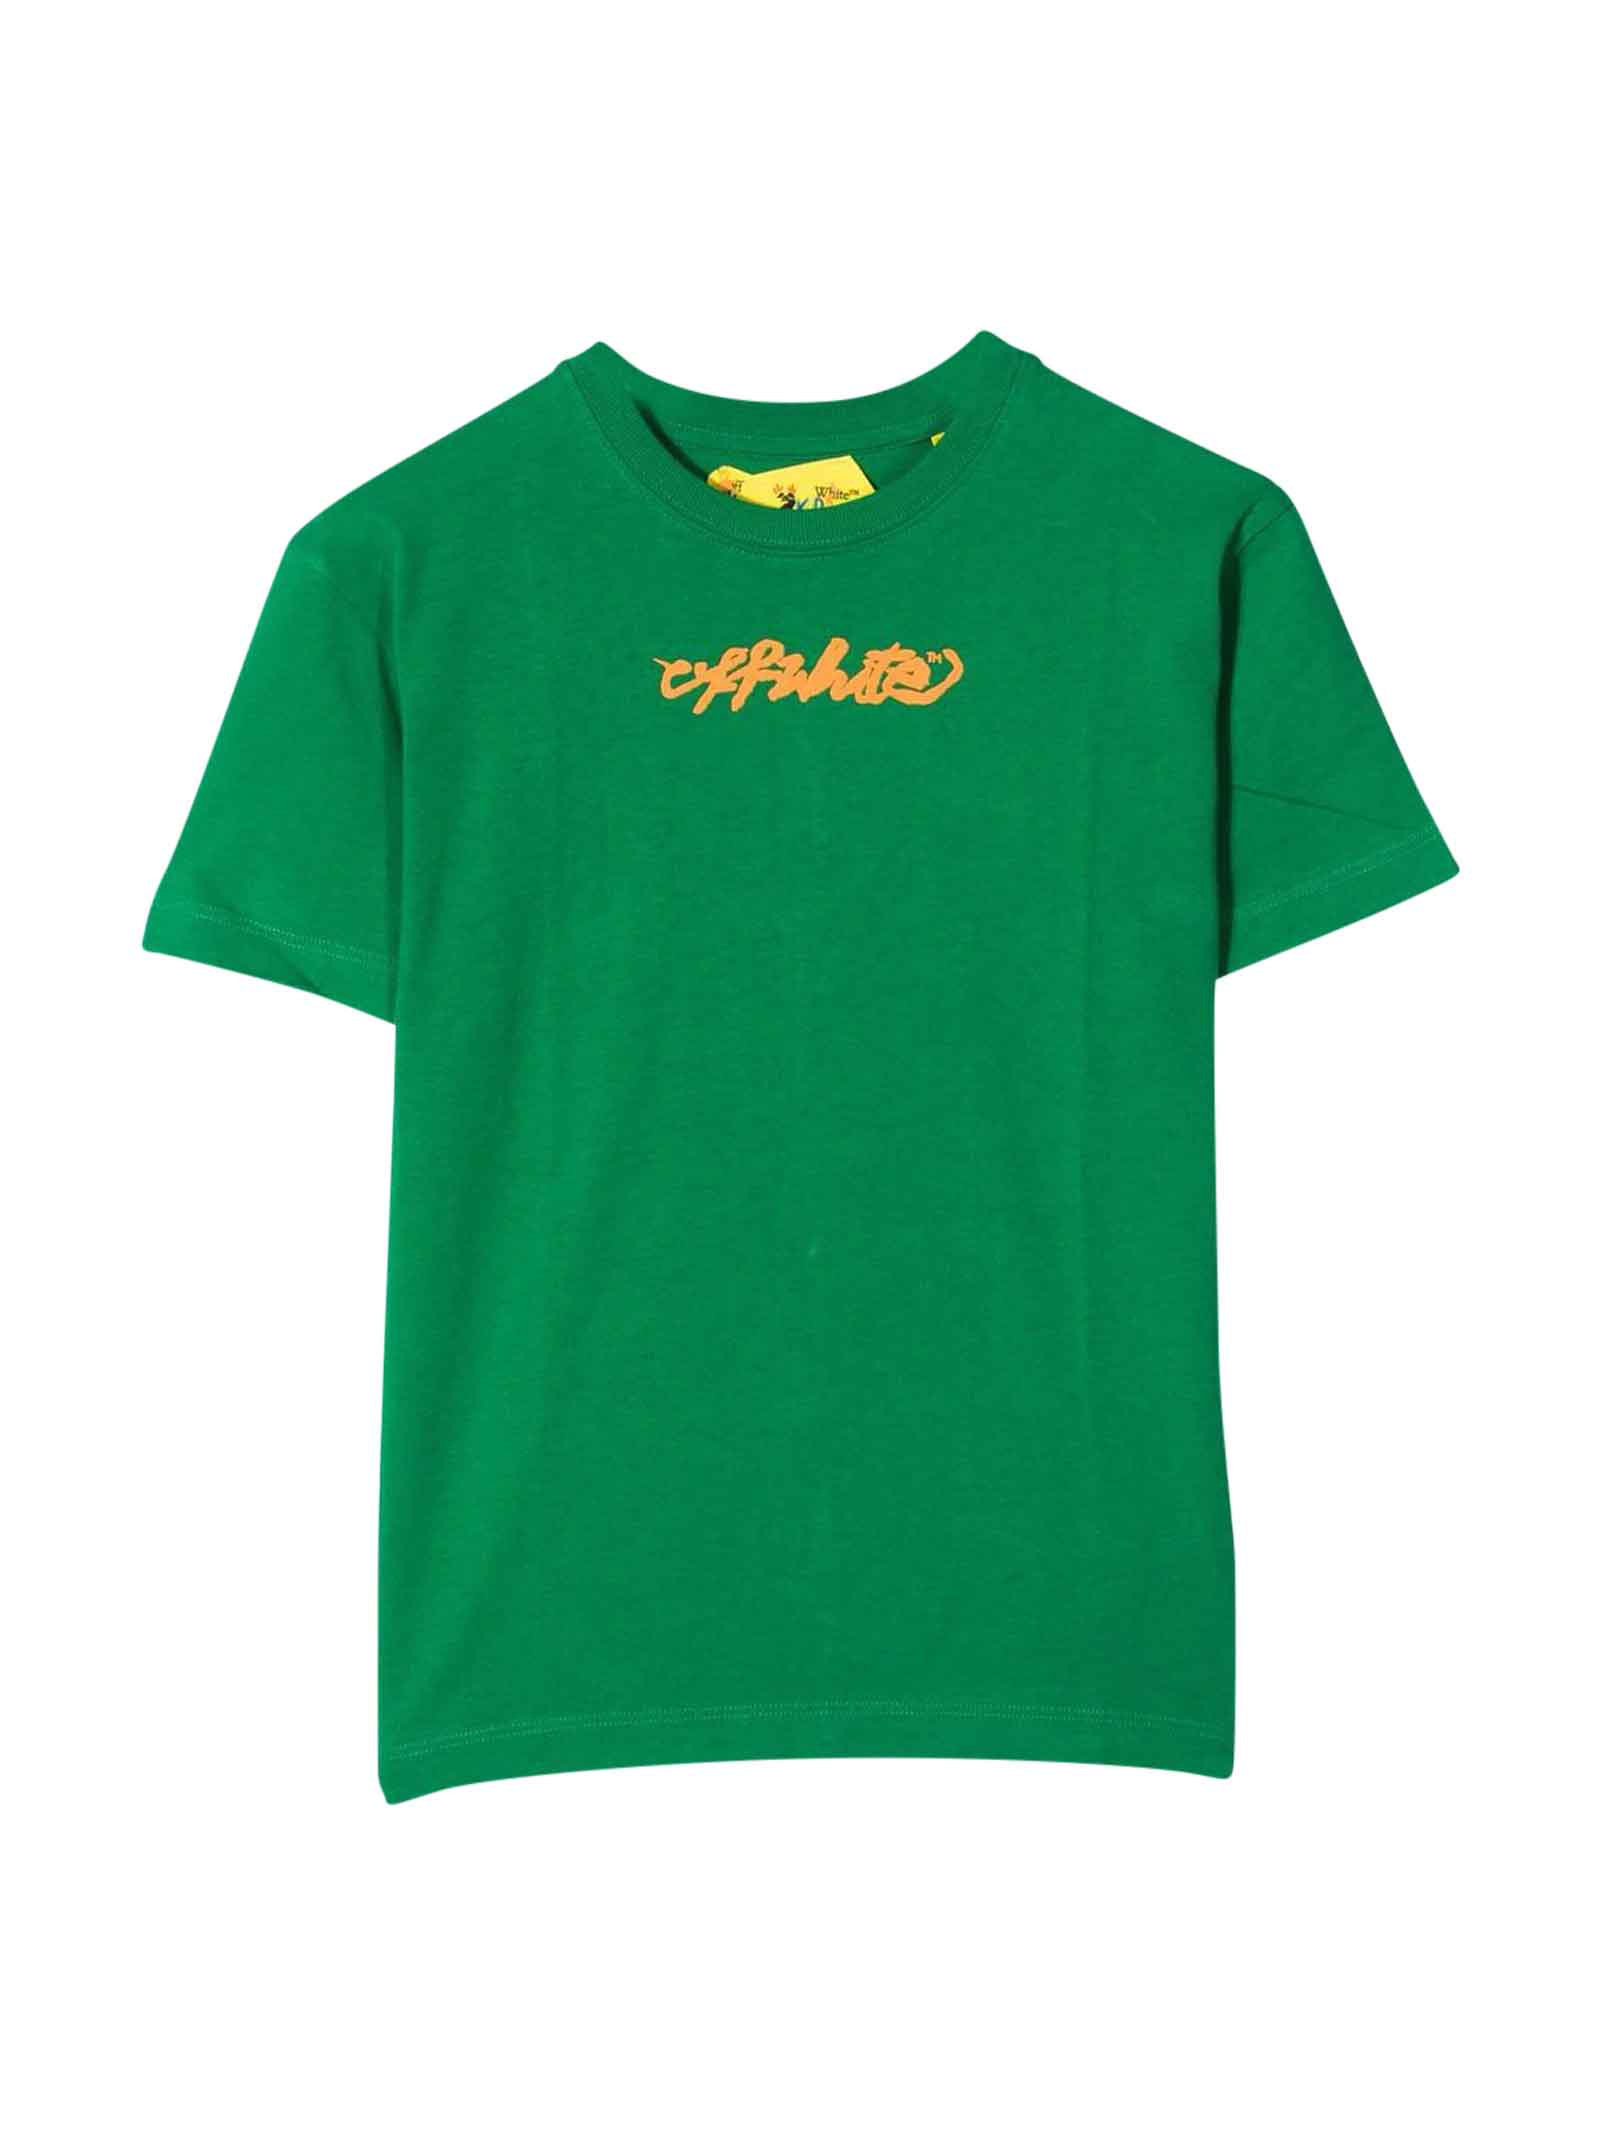 Off-White Green T-shirt With Orange Print